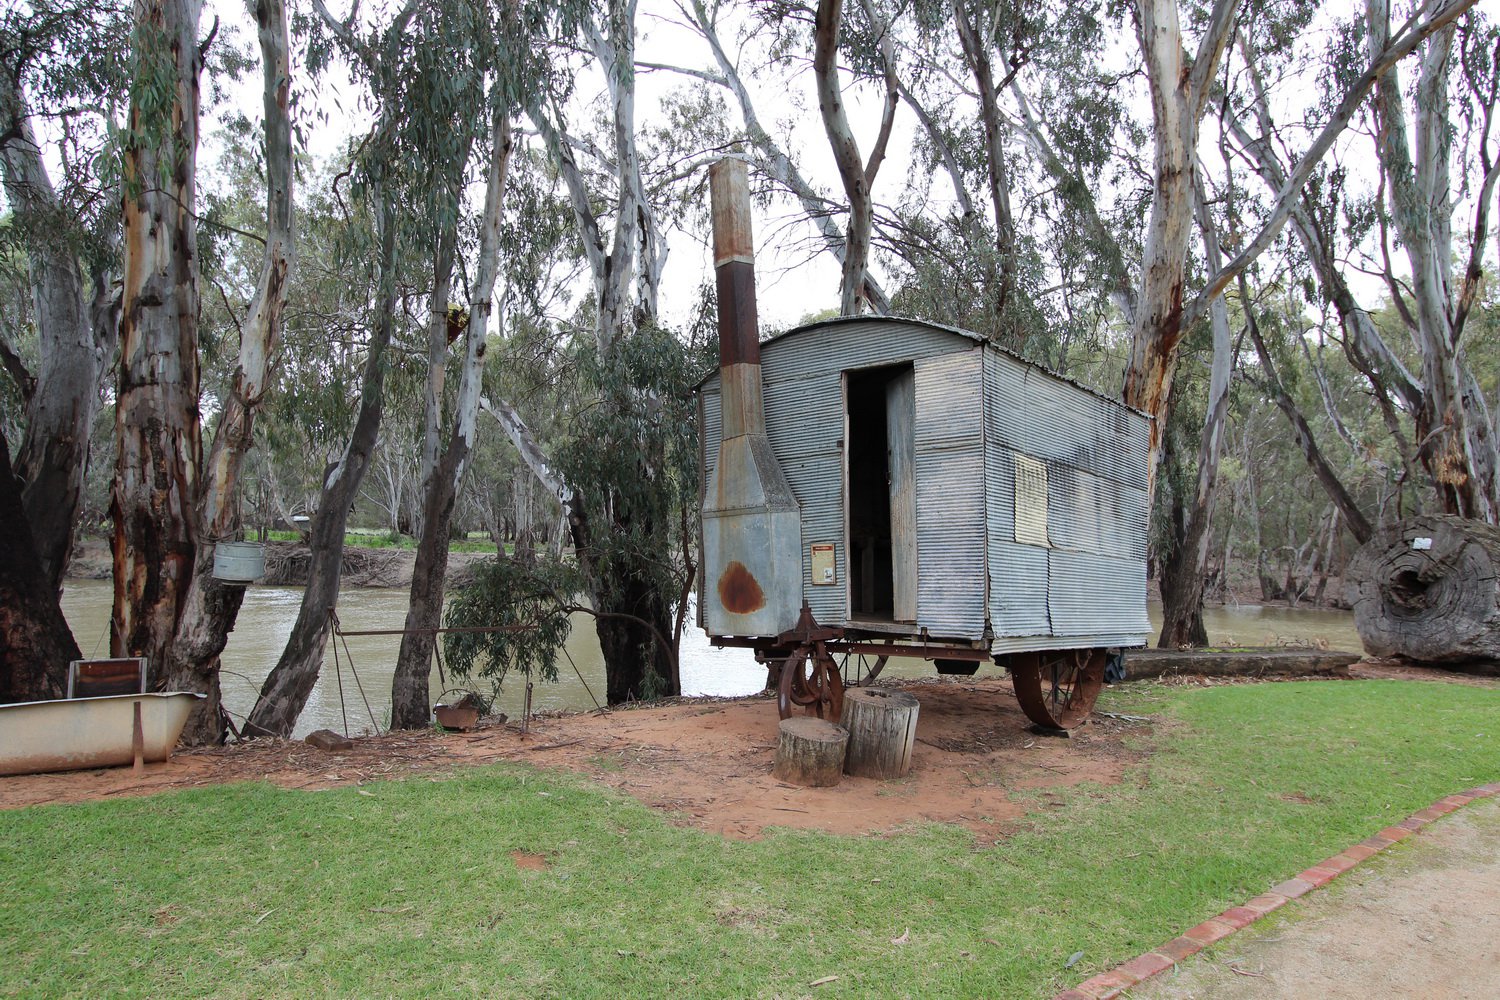 Kitchen cum bedroom early caravan, Pioneer Settlement Swan Hill. North West Victoria Tour, July 2020.